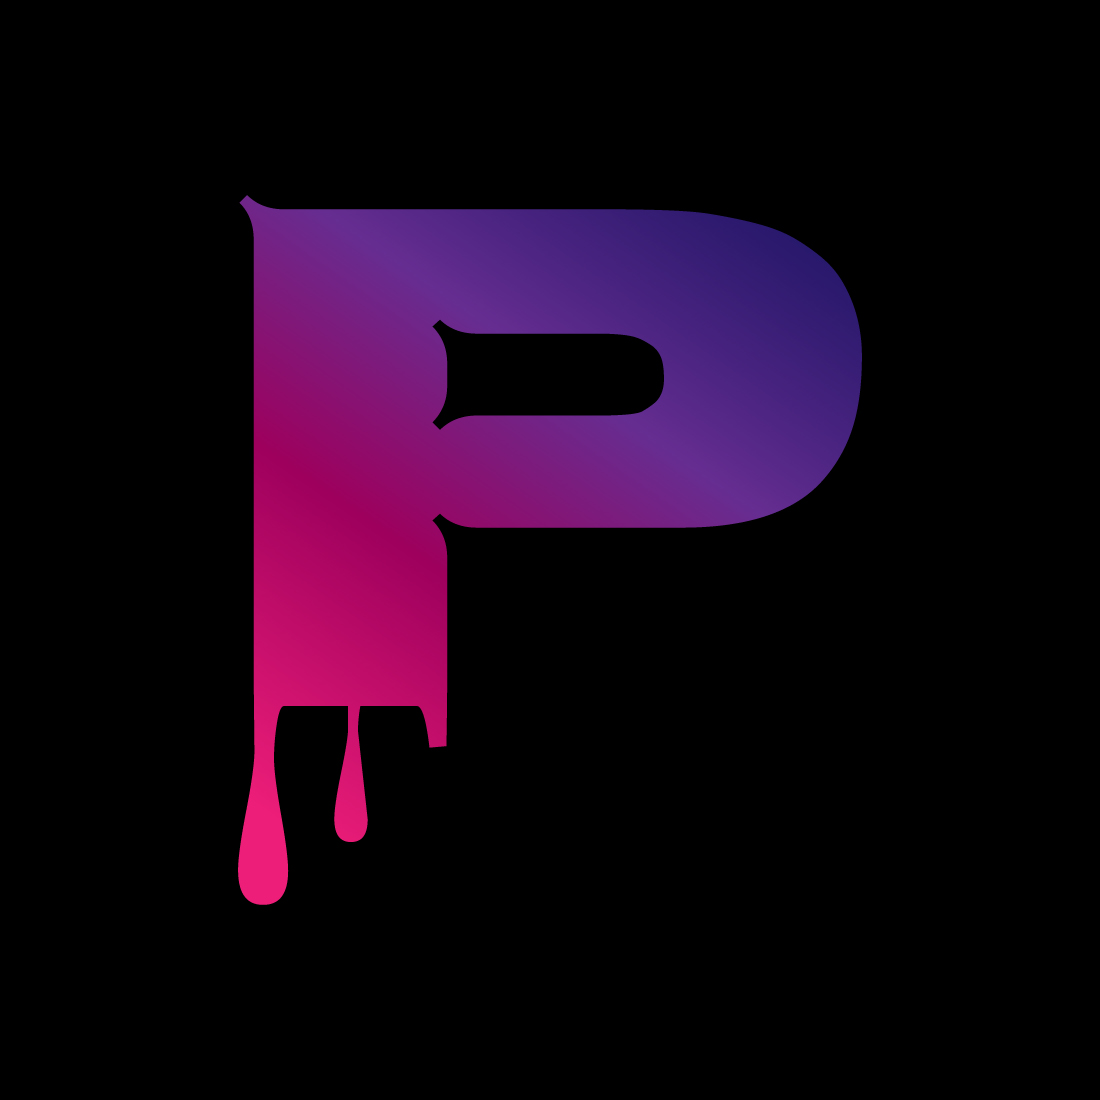 P logo preview image.